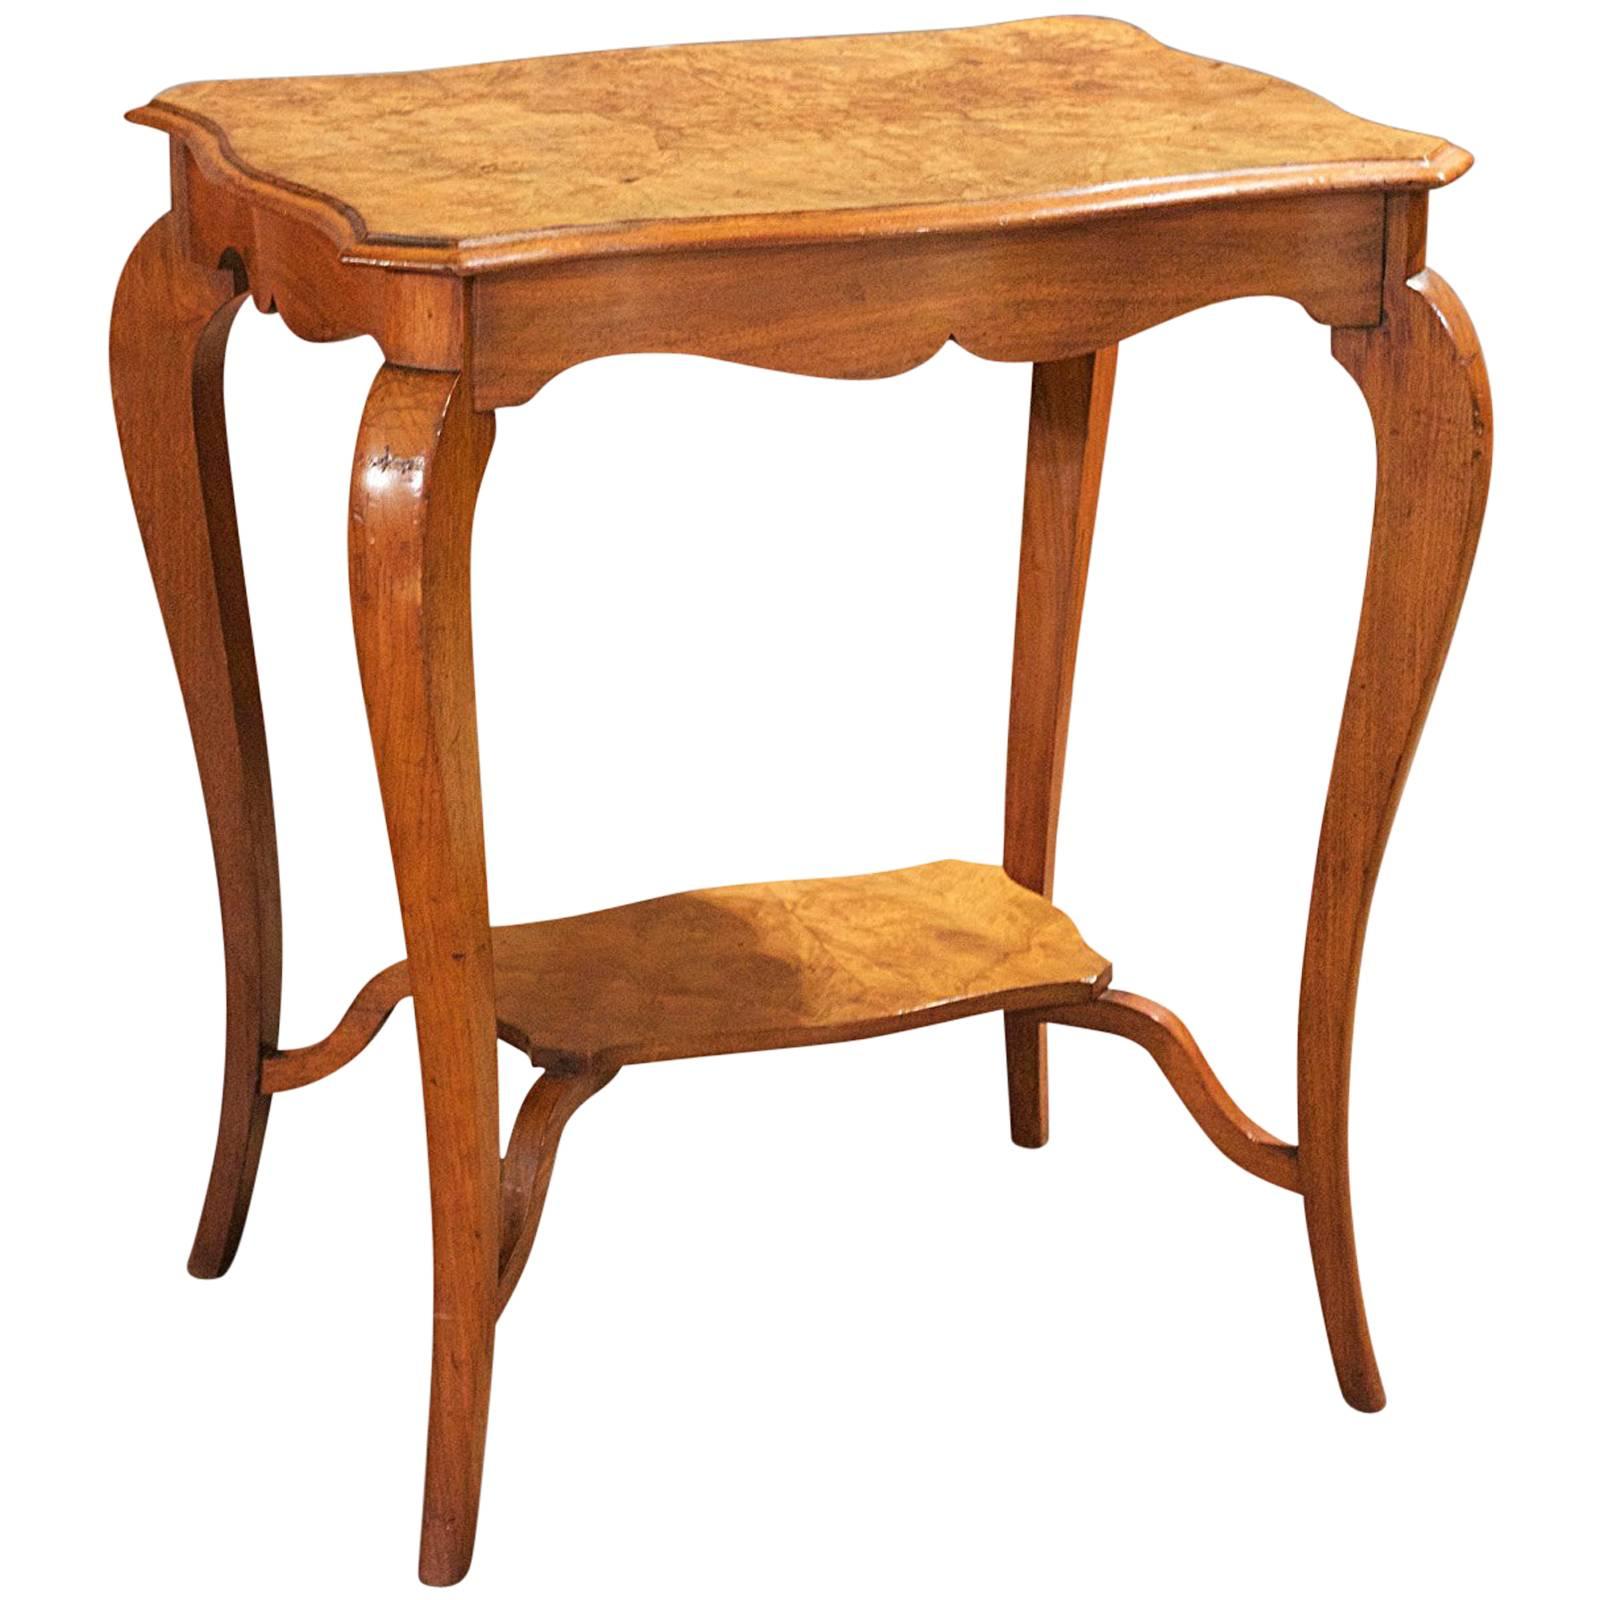 Antique English Burr Walnut Two-Tier Side Table, circa 1900